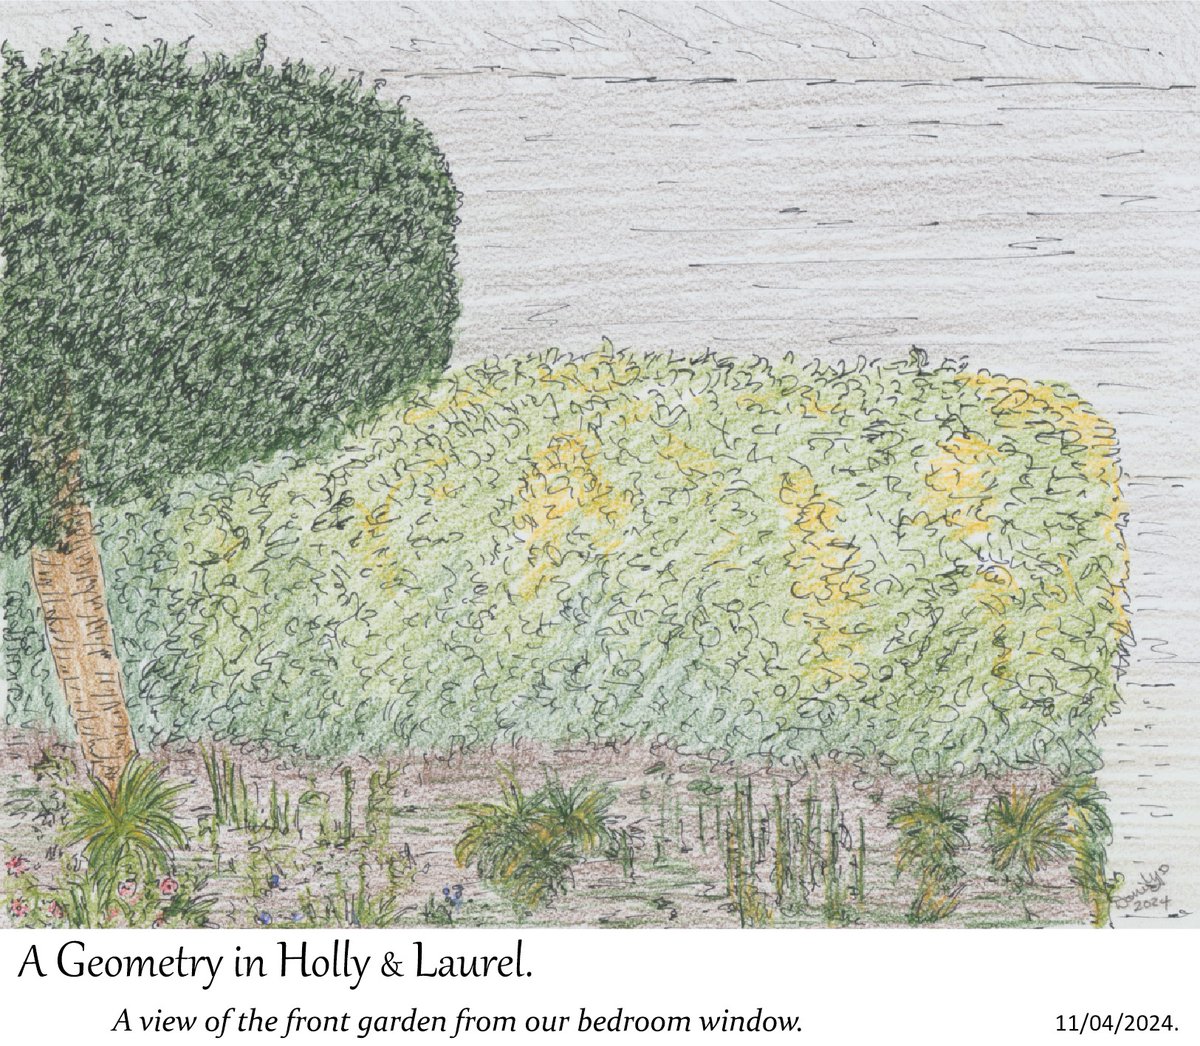 A Geometry in Holly & Laurel #sketch #garden #Holly #Laurel @abdulhayemehta @NorthStandGang @ilegally_indian @AnnieChave @palfreyman1414 @Edgaralanpoe48 @andydurrant75 @cbar2323 @chriswaller1 @kinobe911 @mattbob84 @TheKenAshley #pen & #pencil #drawing #drawingart #sketchart #art